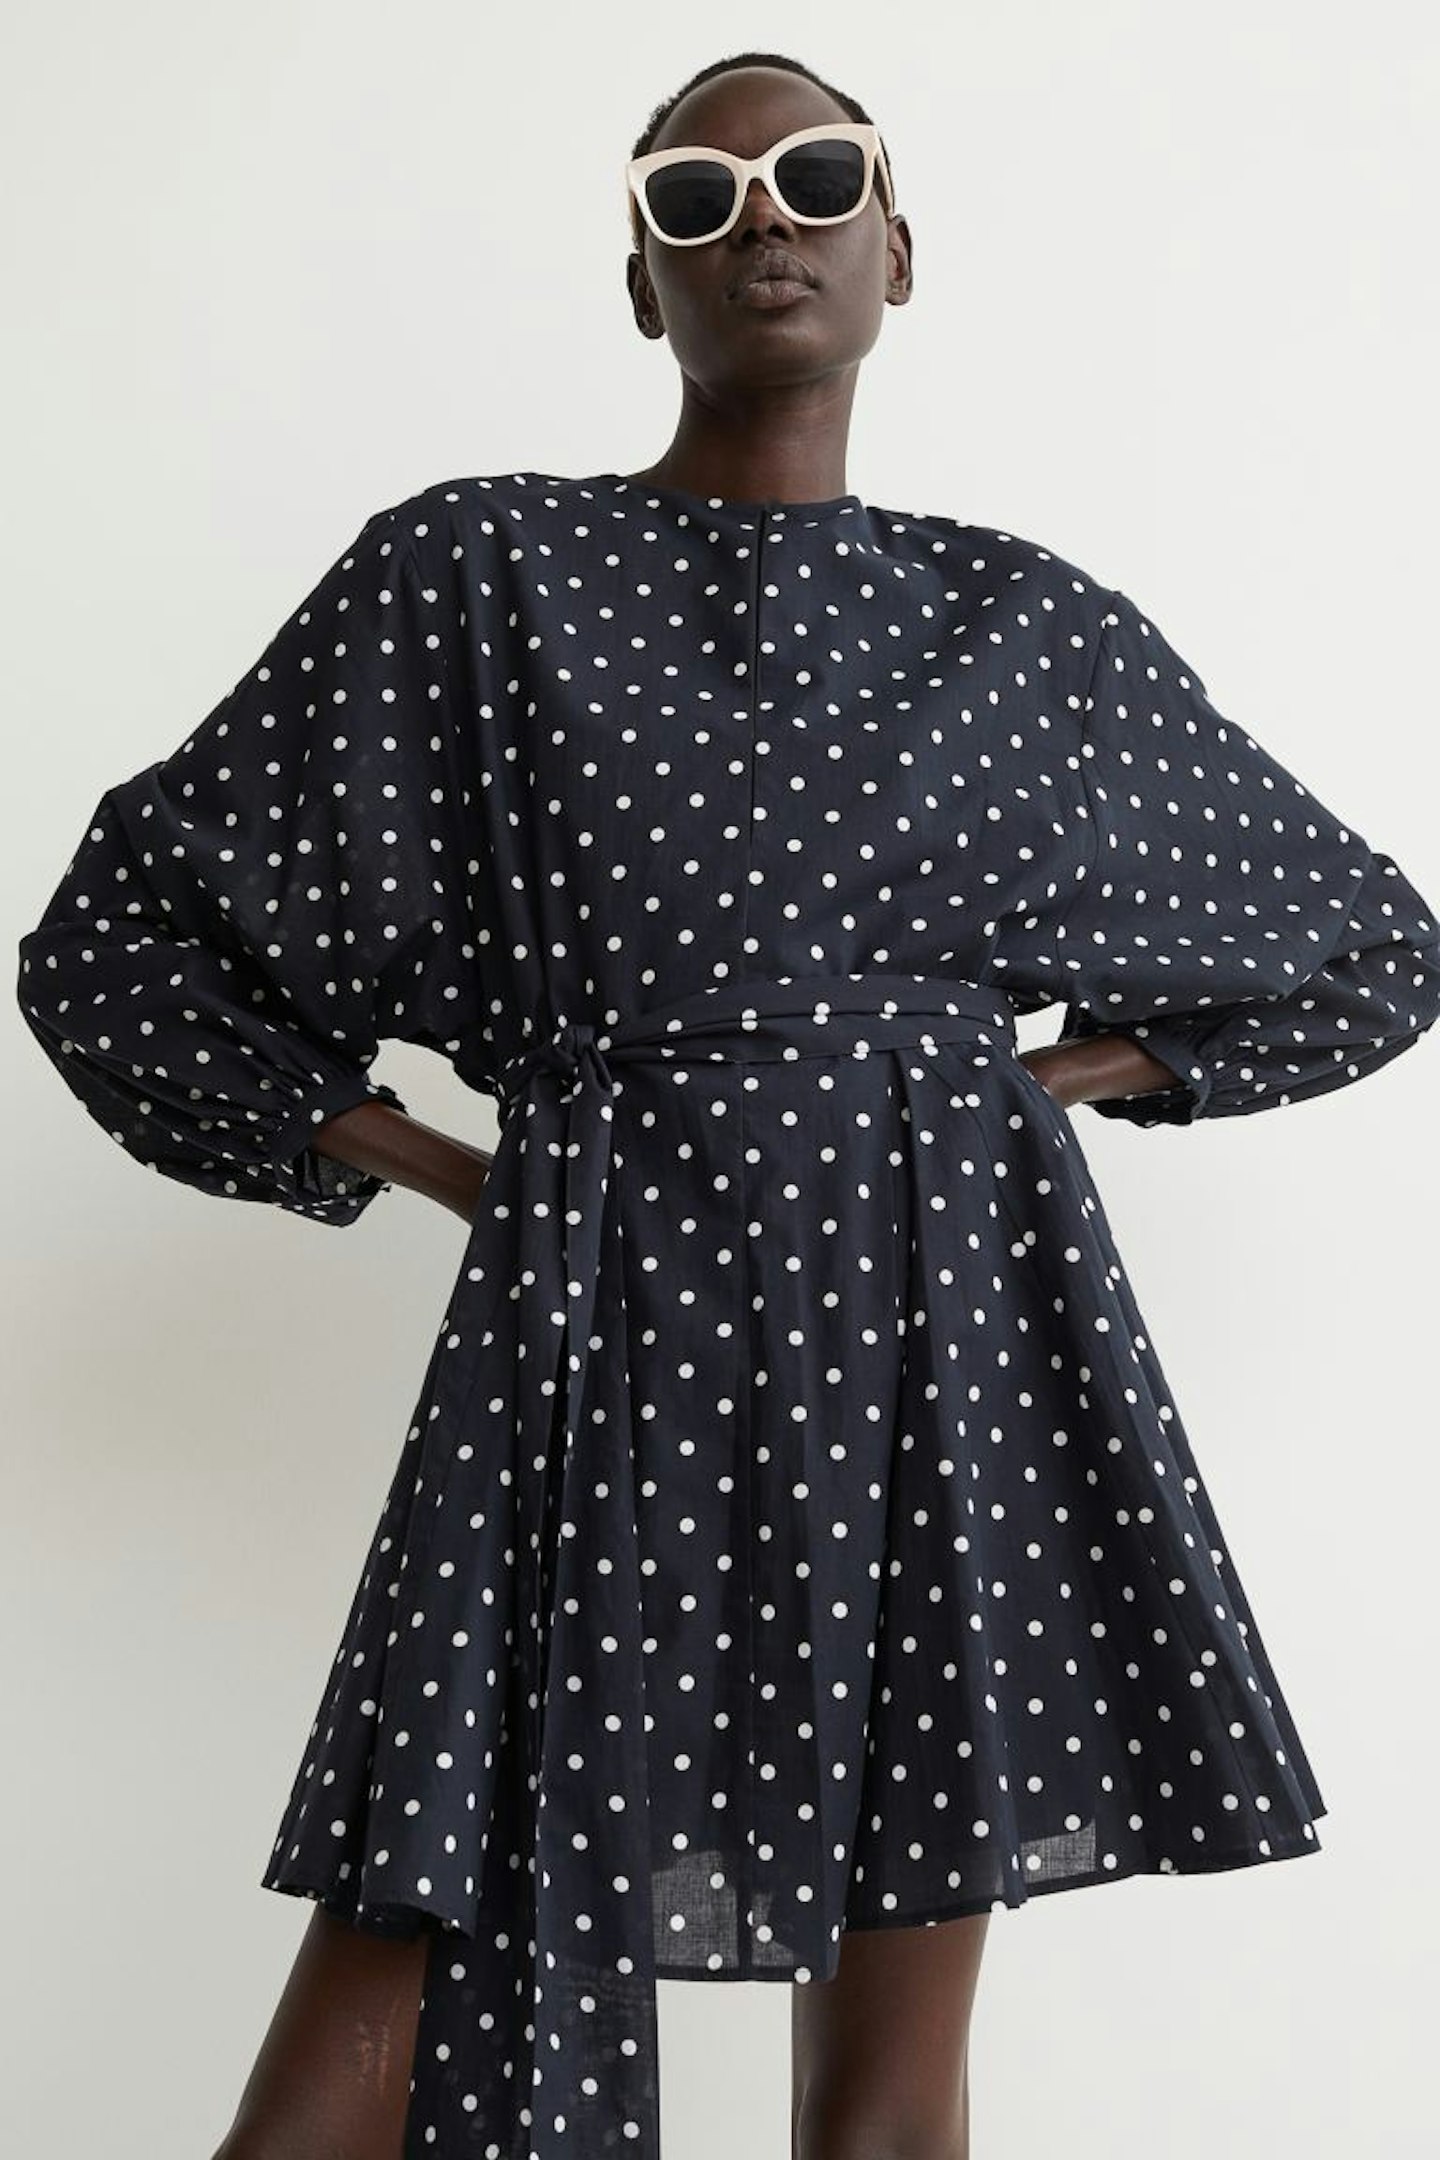 H&M, Polka Dot Mini Dress, £34.99